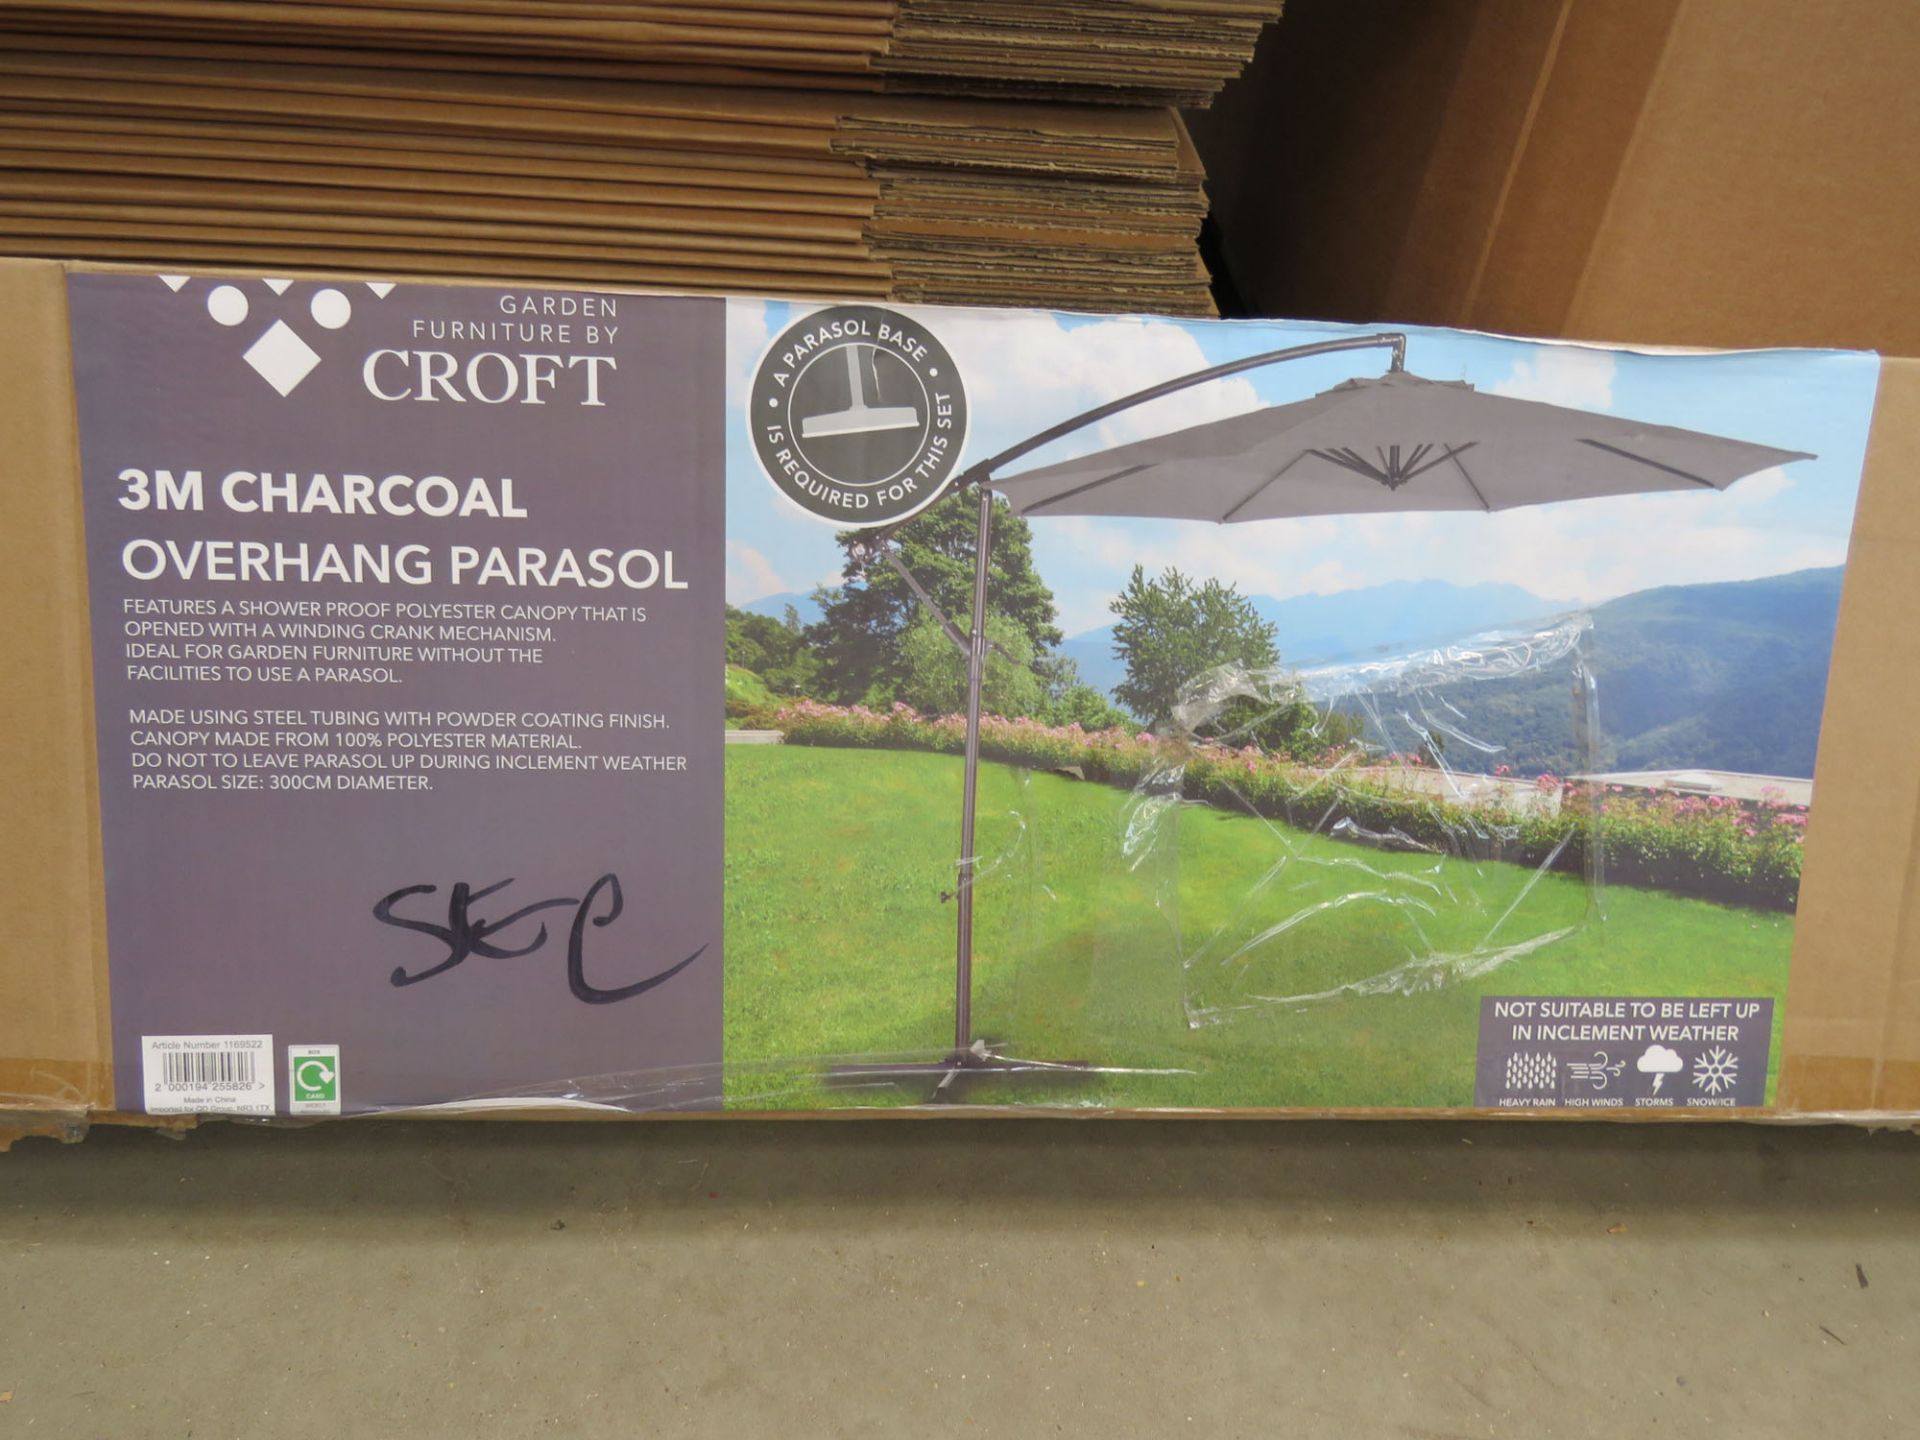 3m charcoal overhang carrousel - Image 2 of 2